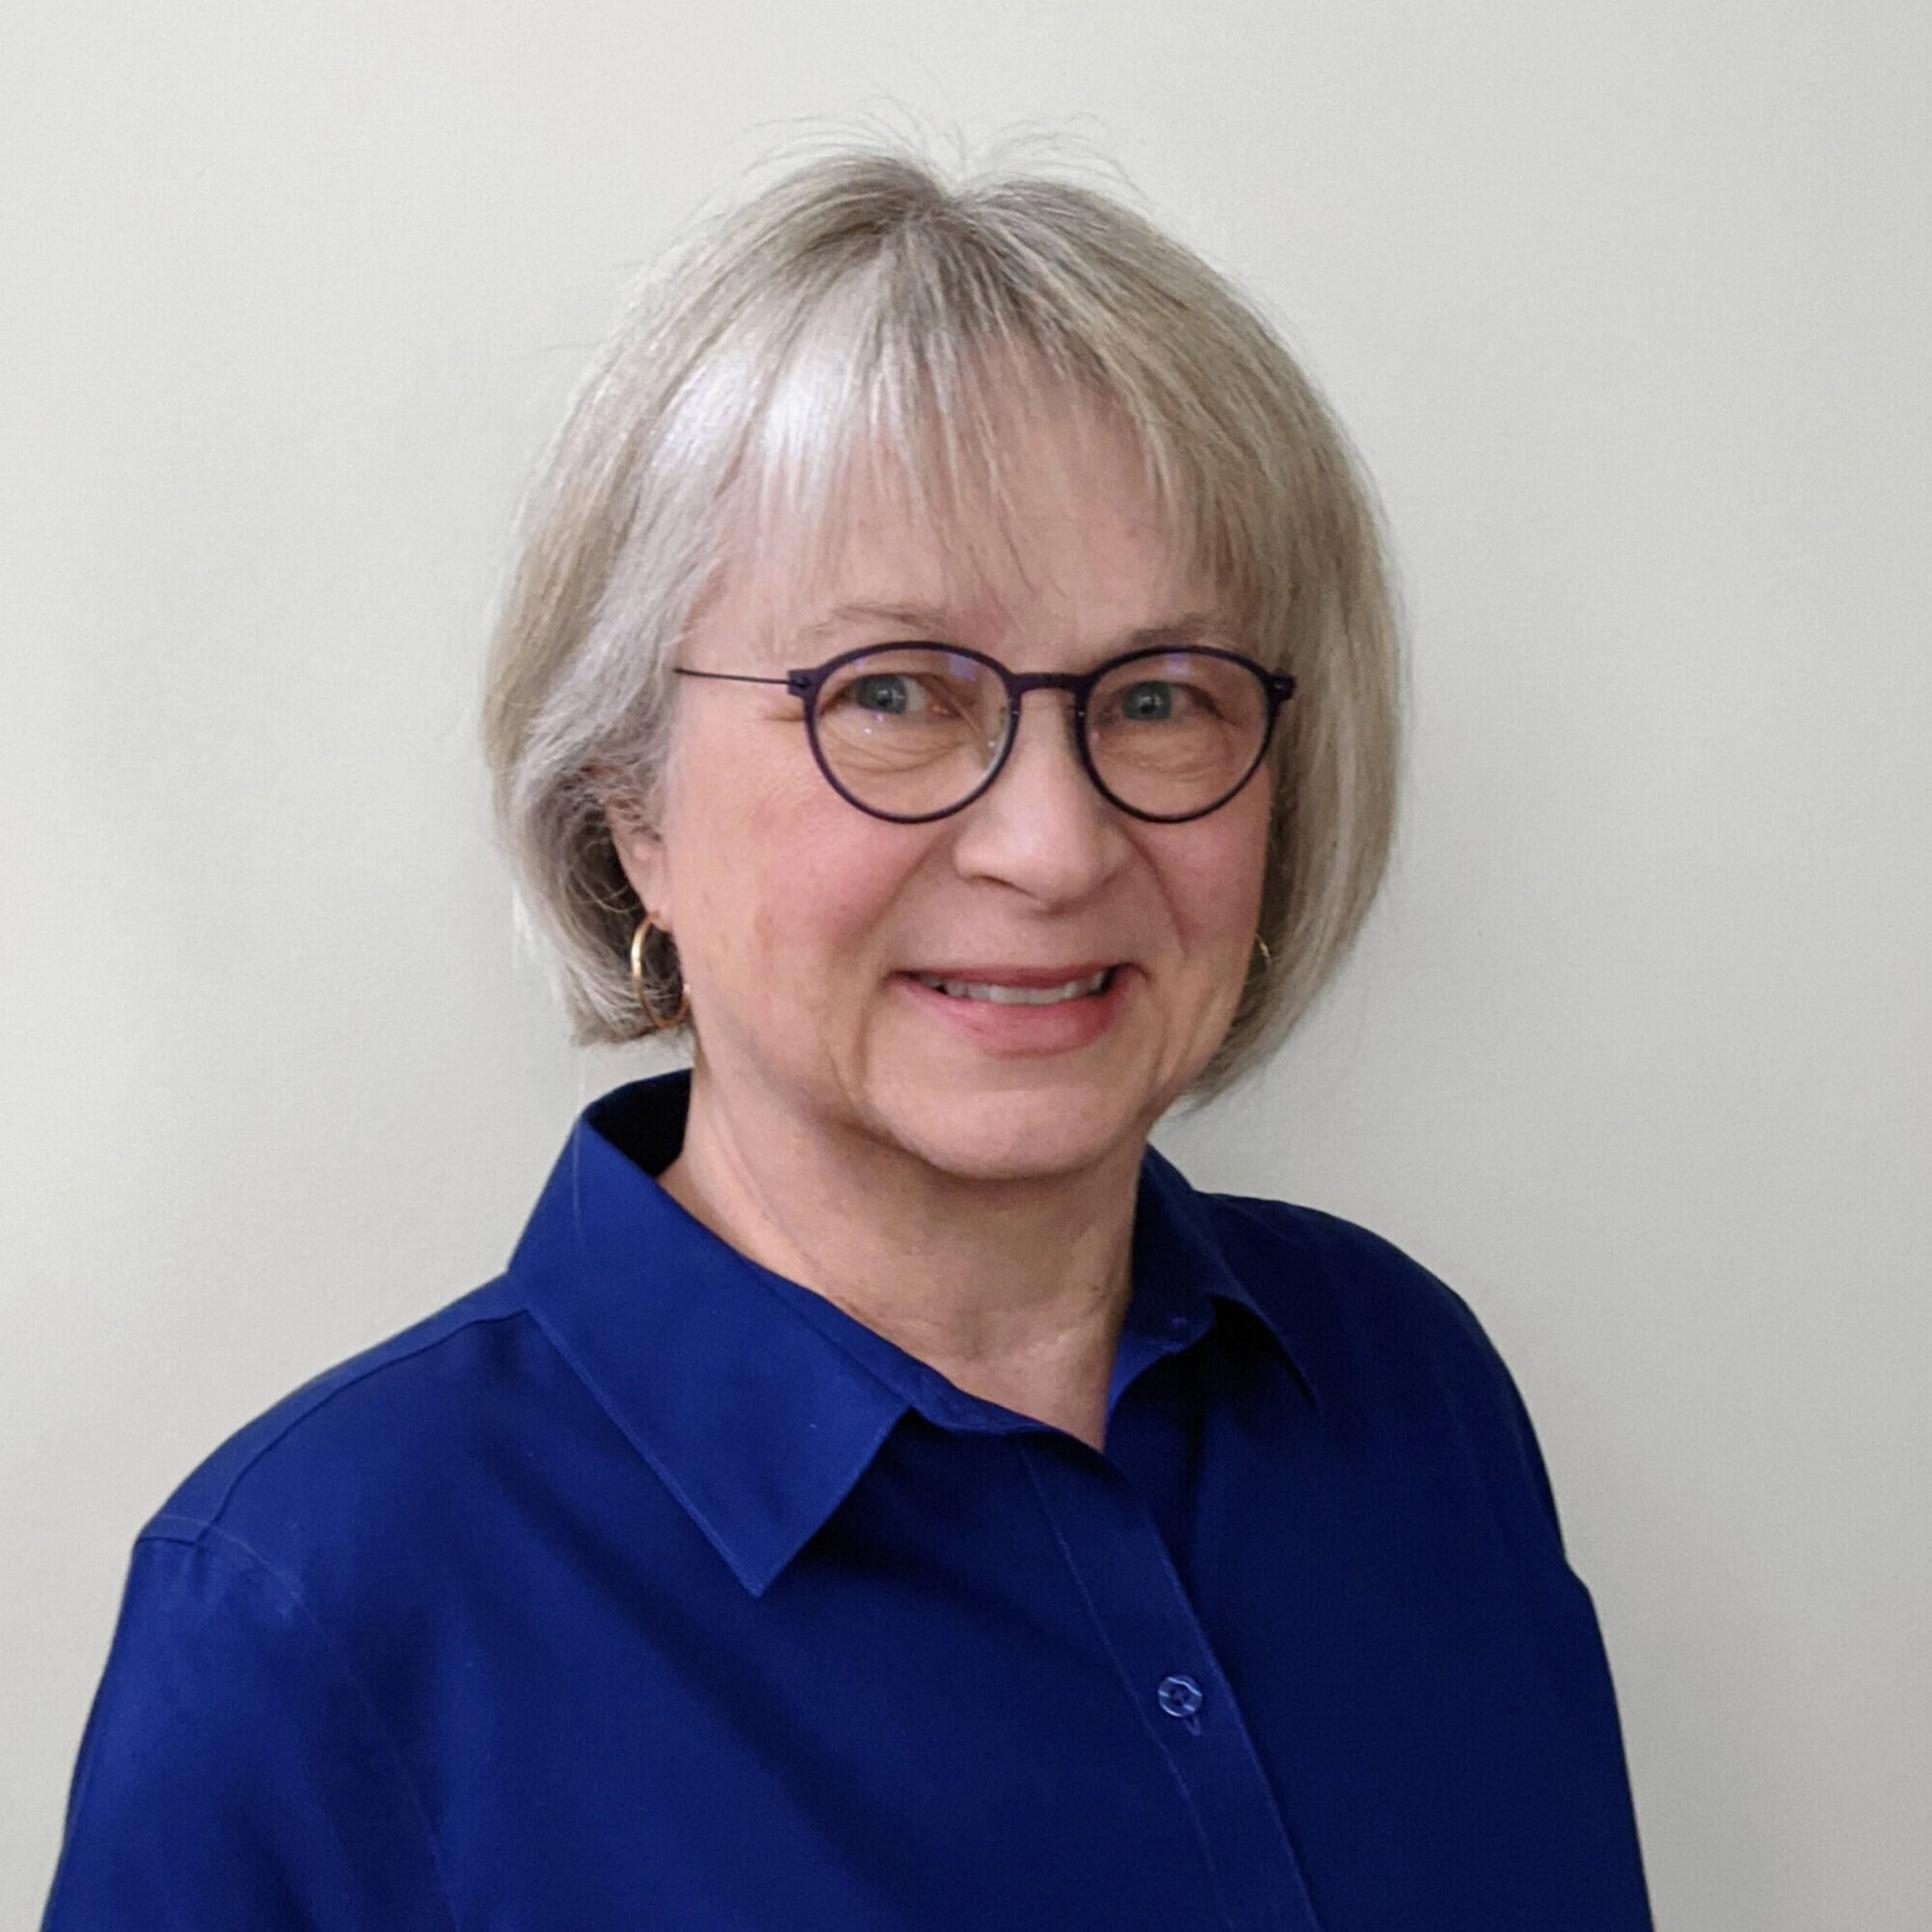 Lynn Bjorkman, Vice President